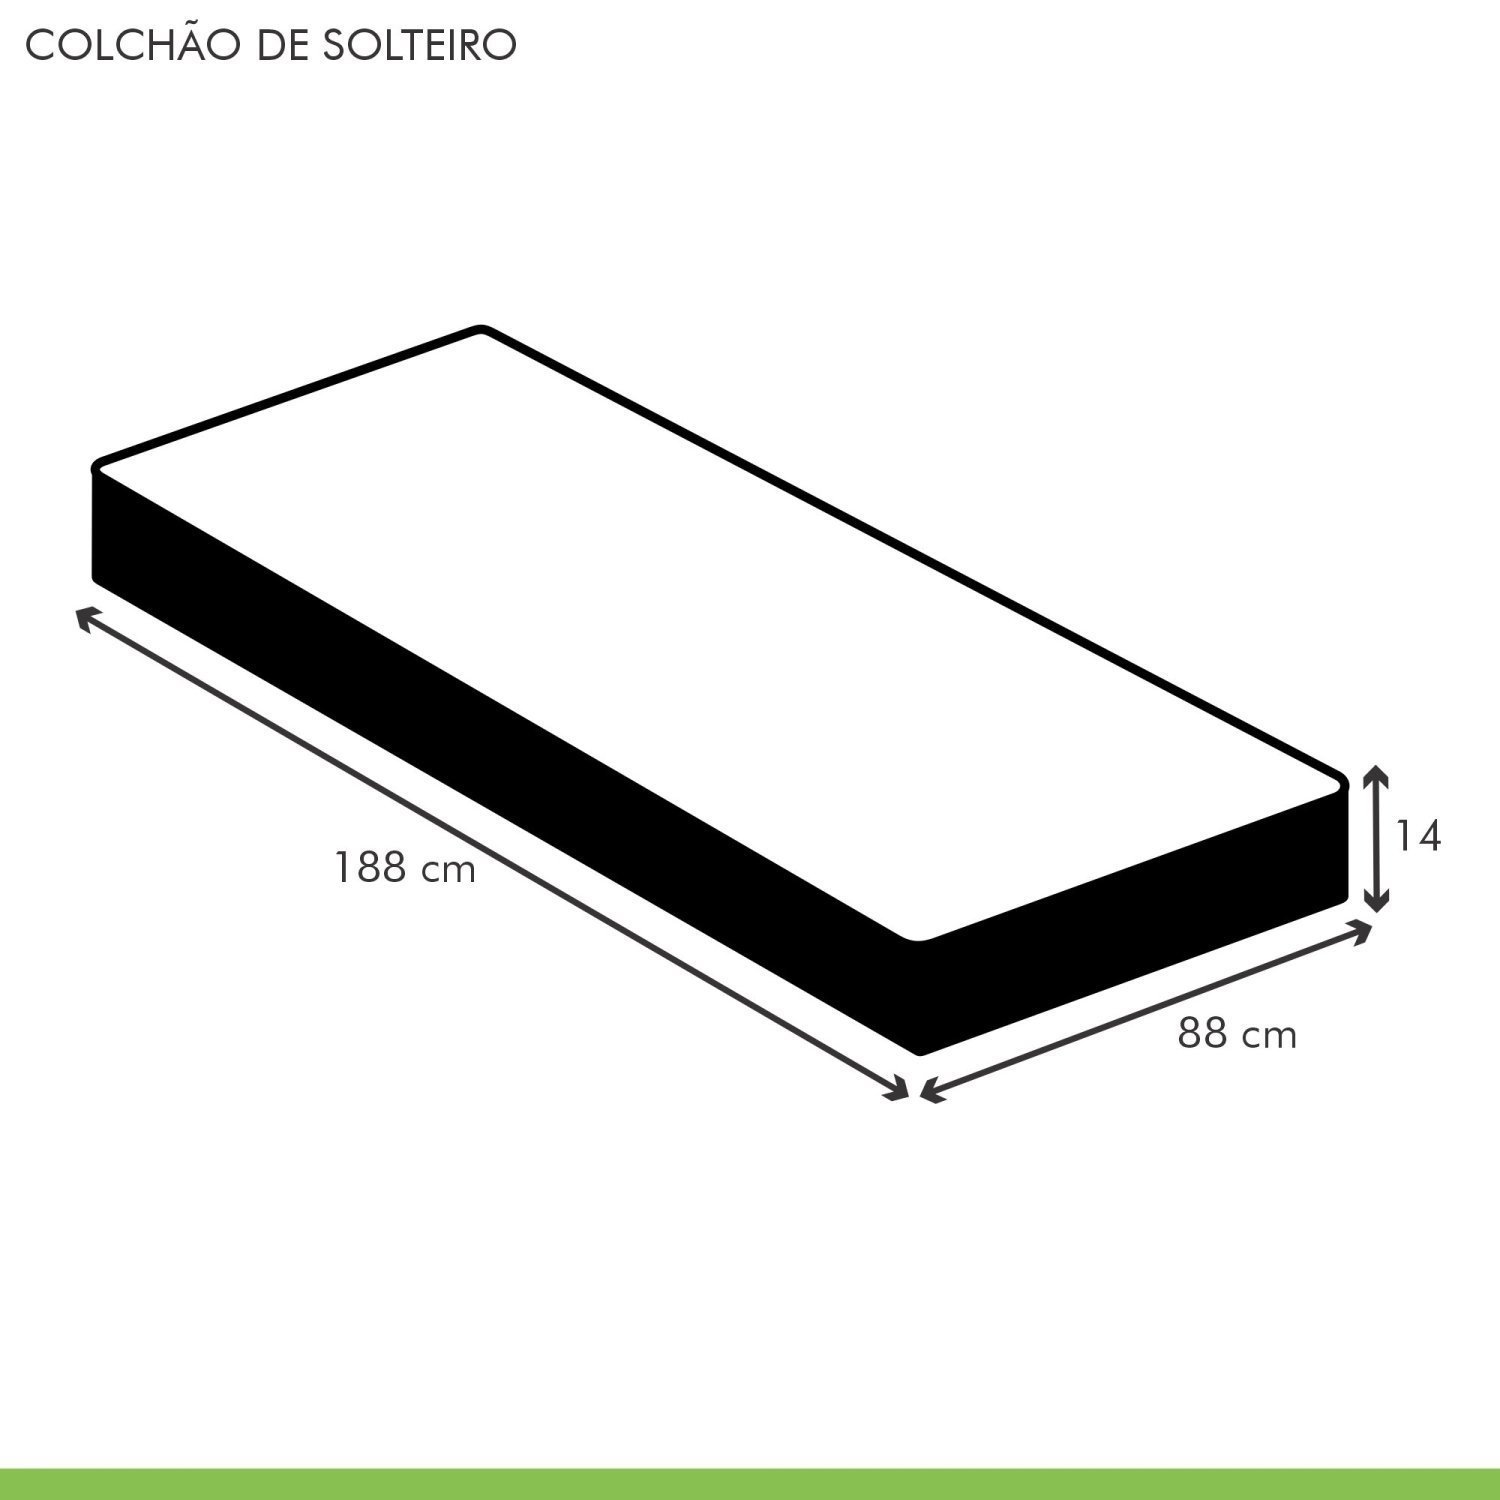 Colchão Solteiro Unique D33 Plus Duoface 14x88x188cm  - 6